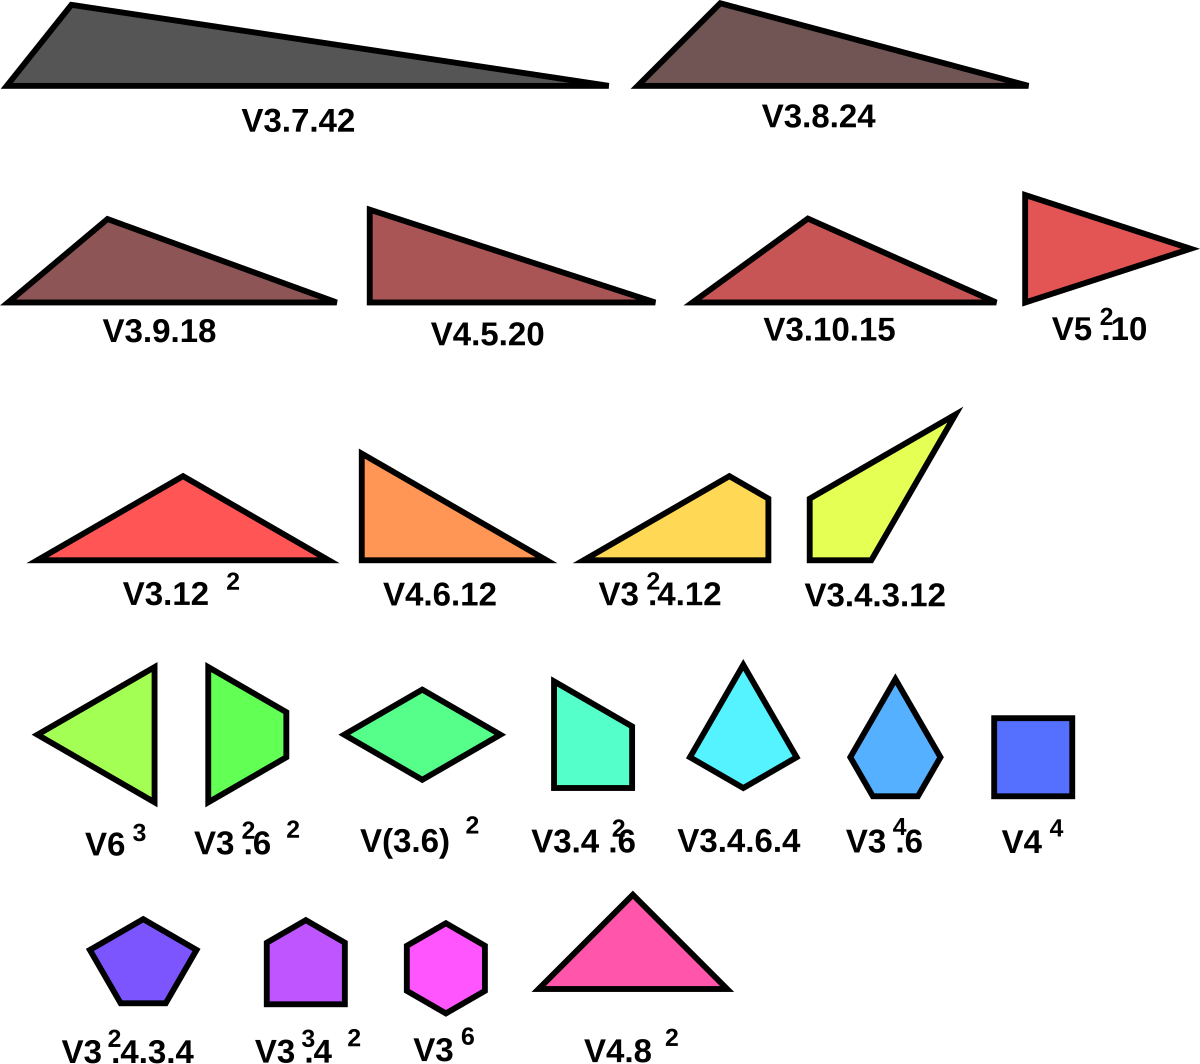 types of irregular polygons